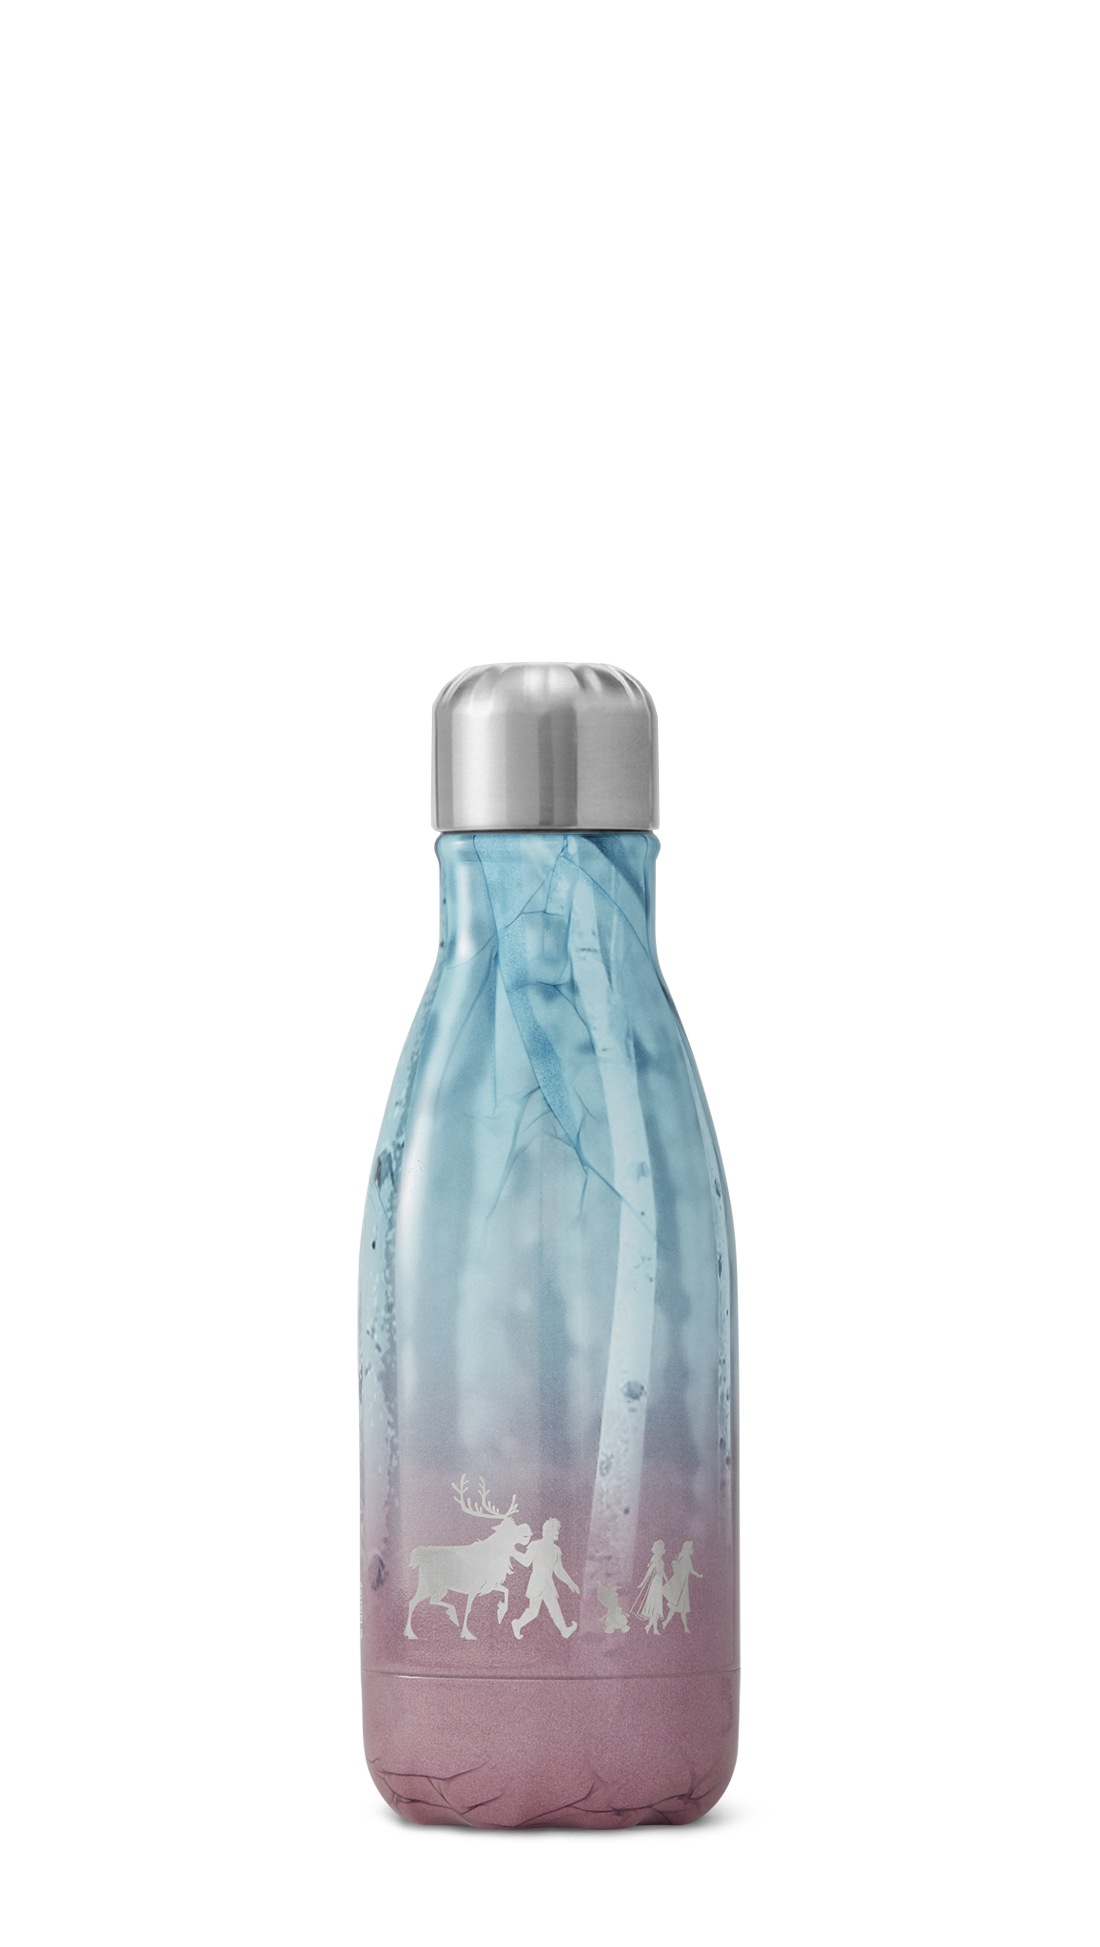 Disney Frozen 2 Frozen Quest S'well Water Bottle - The Grasshopper Shop